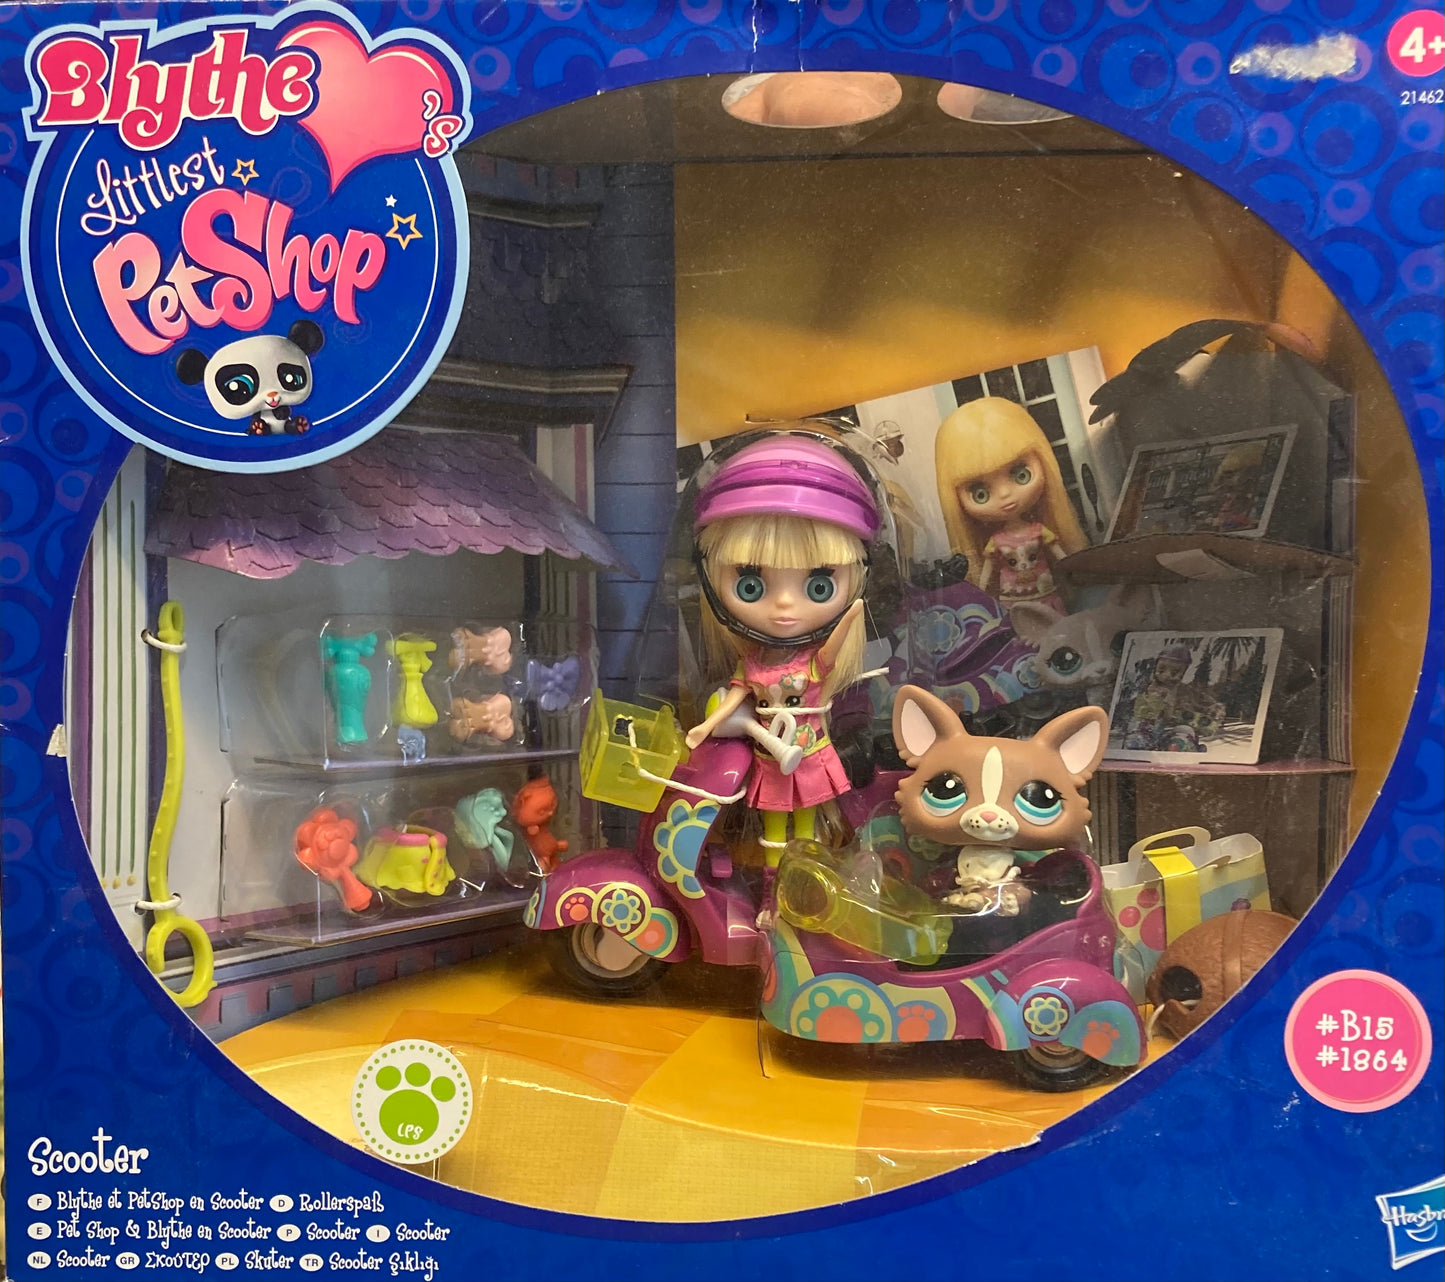 Hasbro Littlest Pet Shop 21462